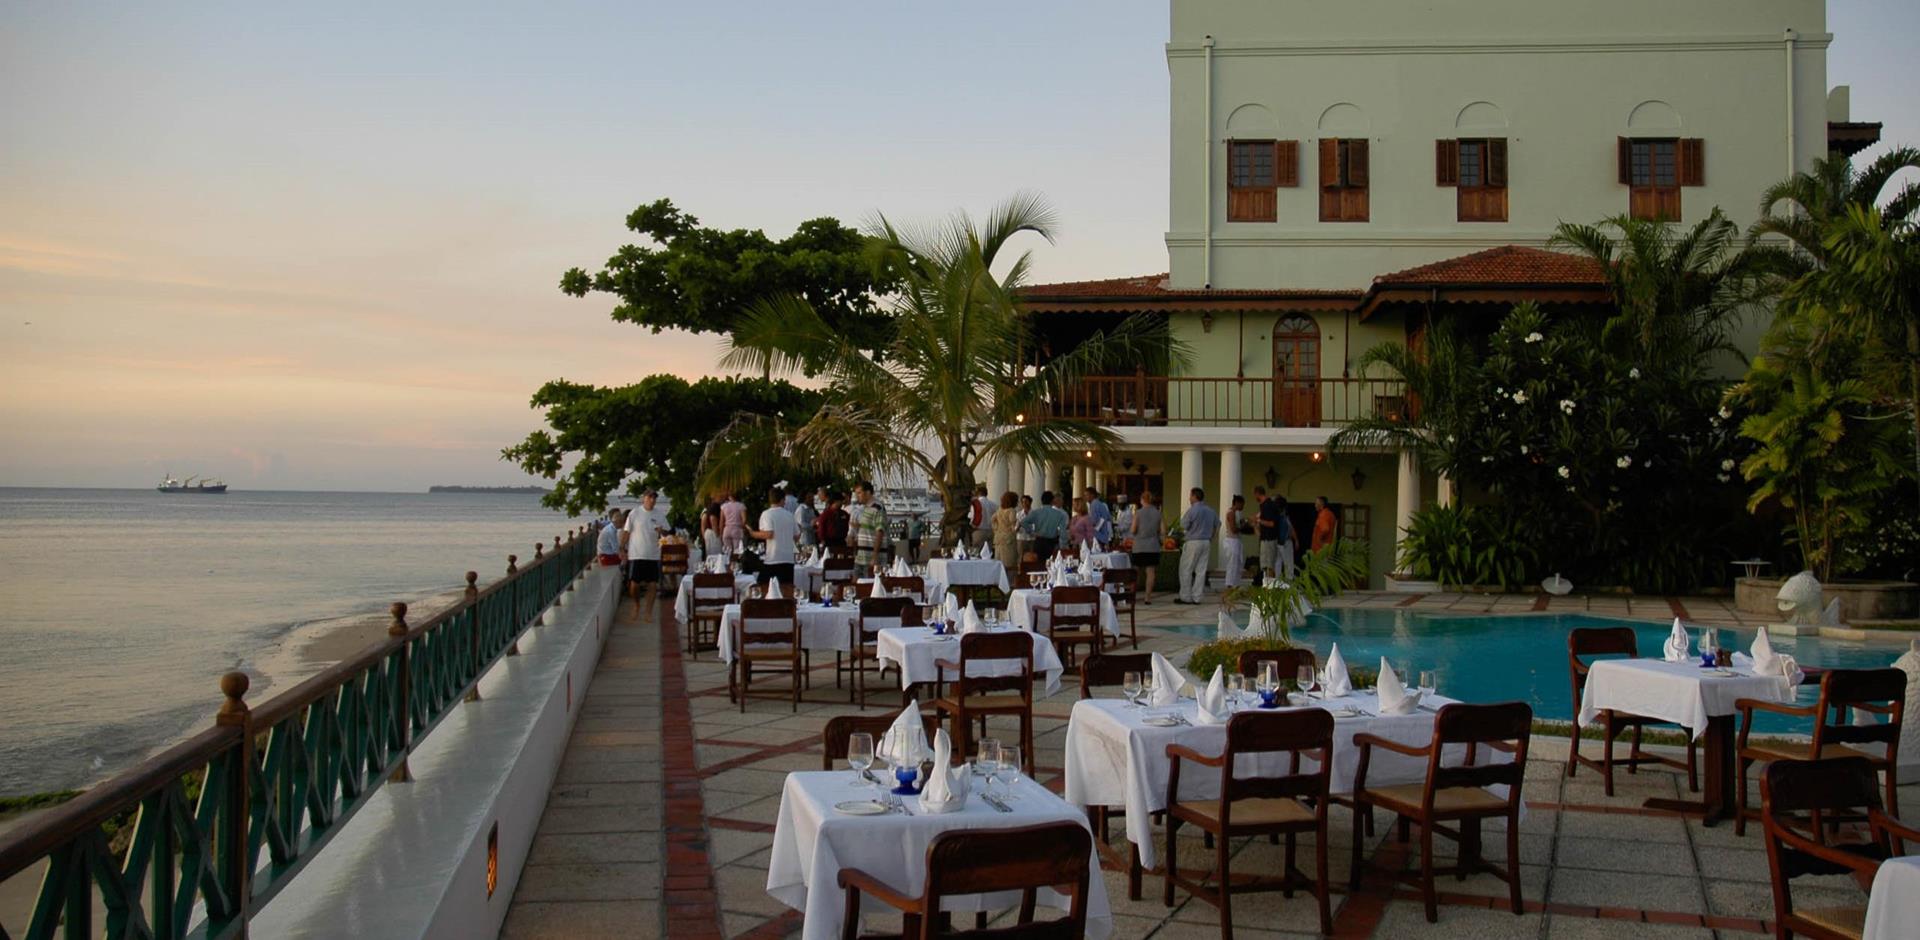 Poolside dining, Zanzibar Serena Hotel, Tanzania, A&K